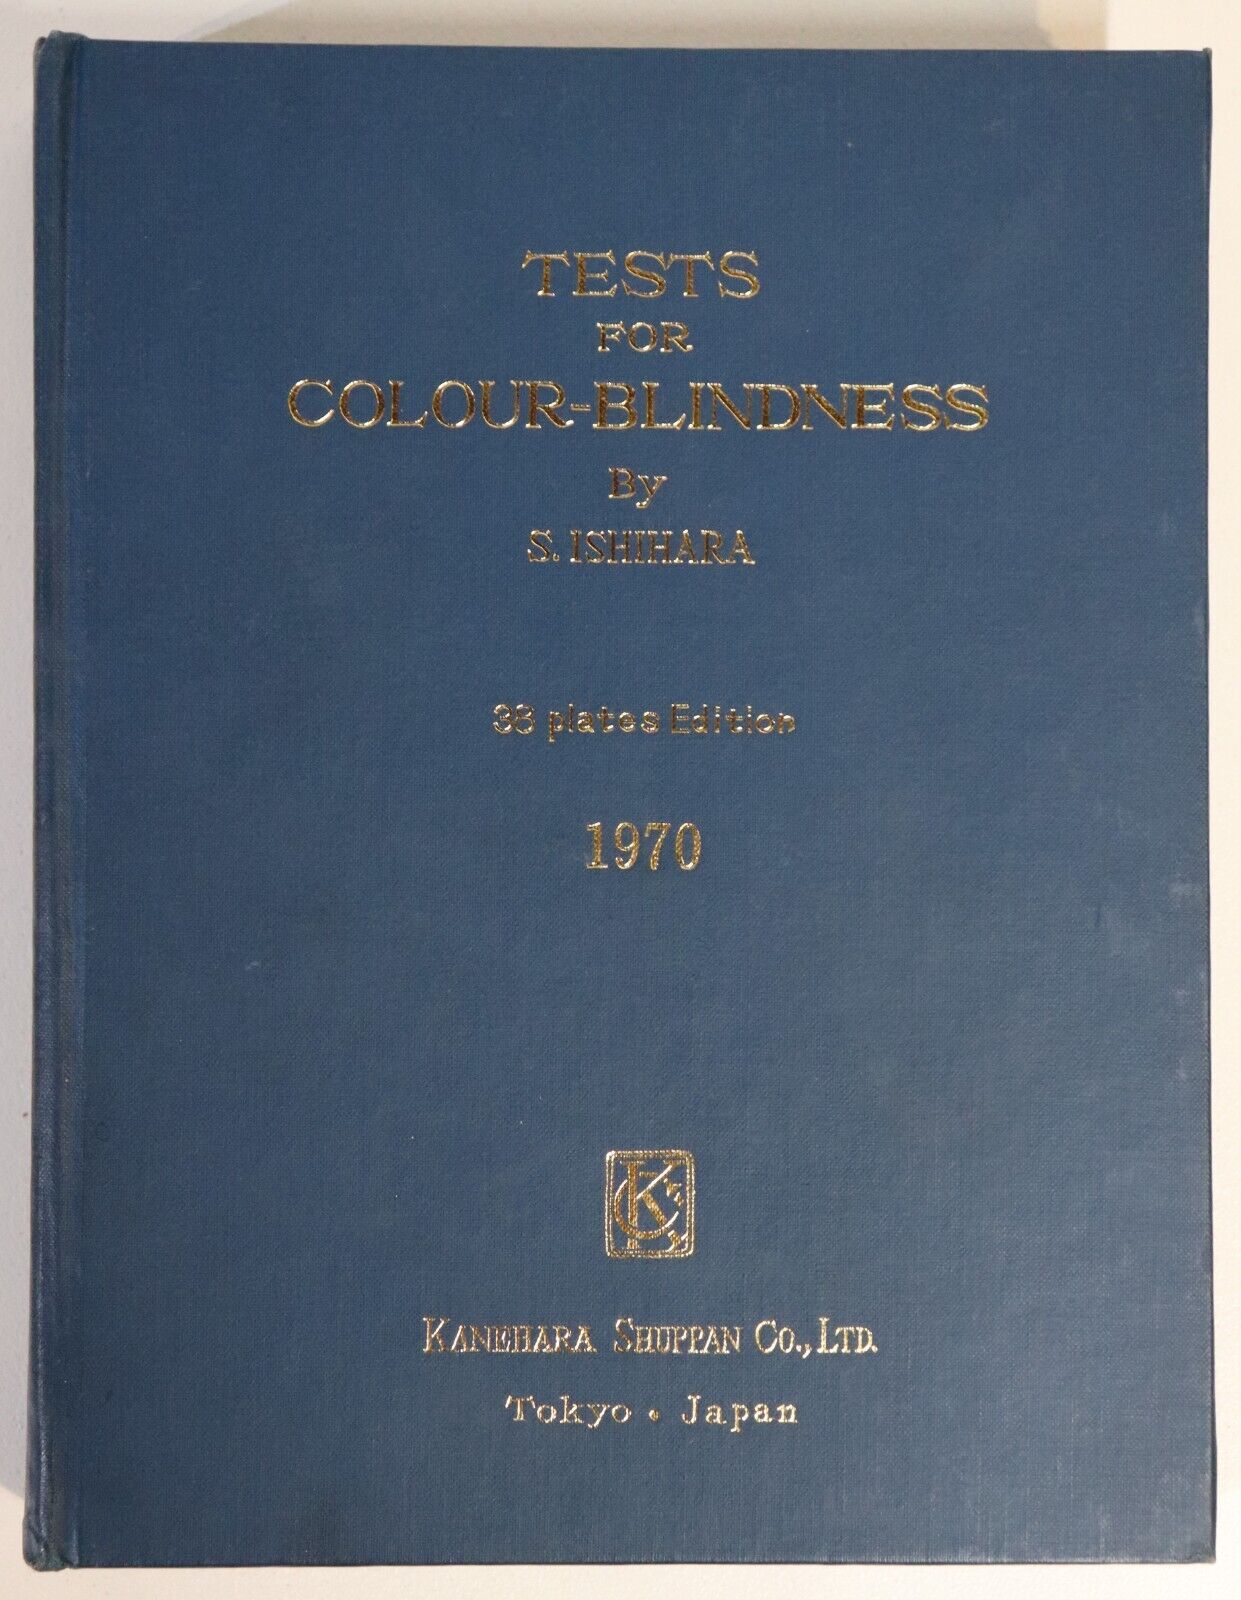 Test Plates For Colour Blindness - 1970 - Vintage Medical Reference Book